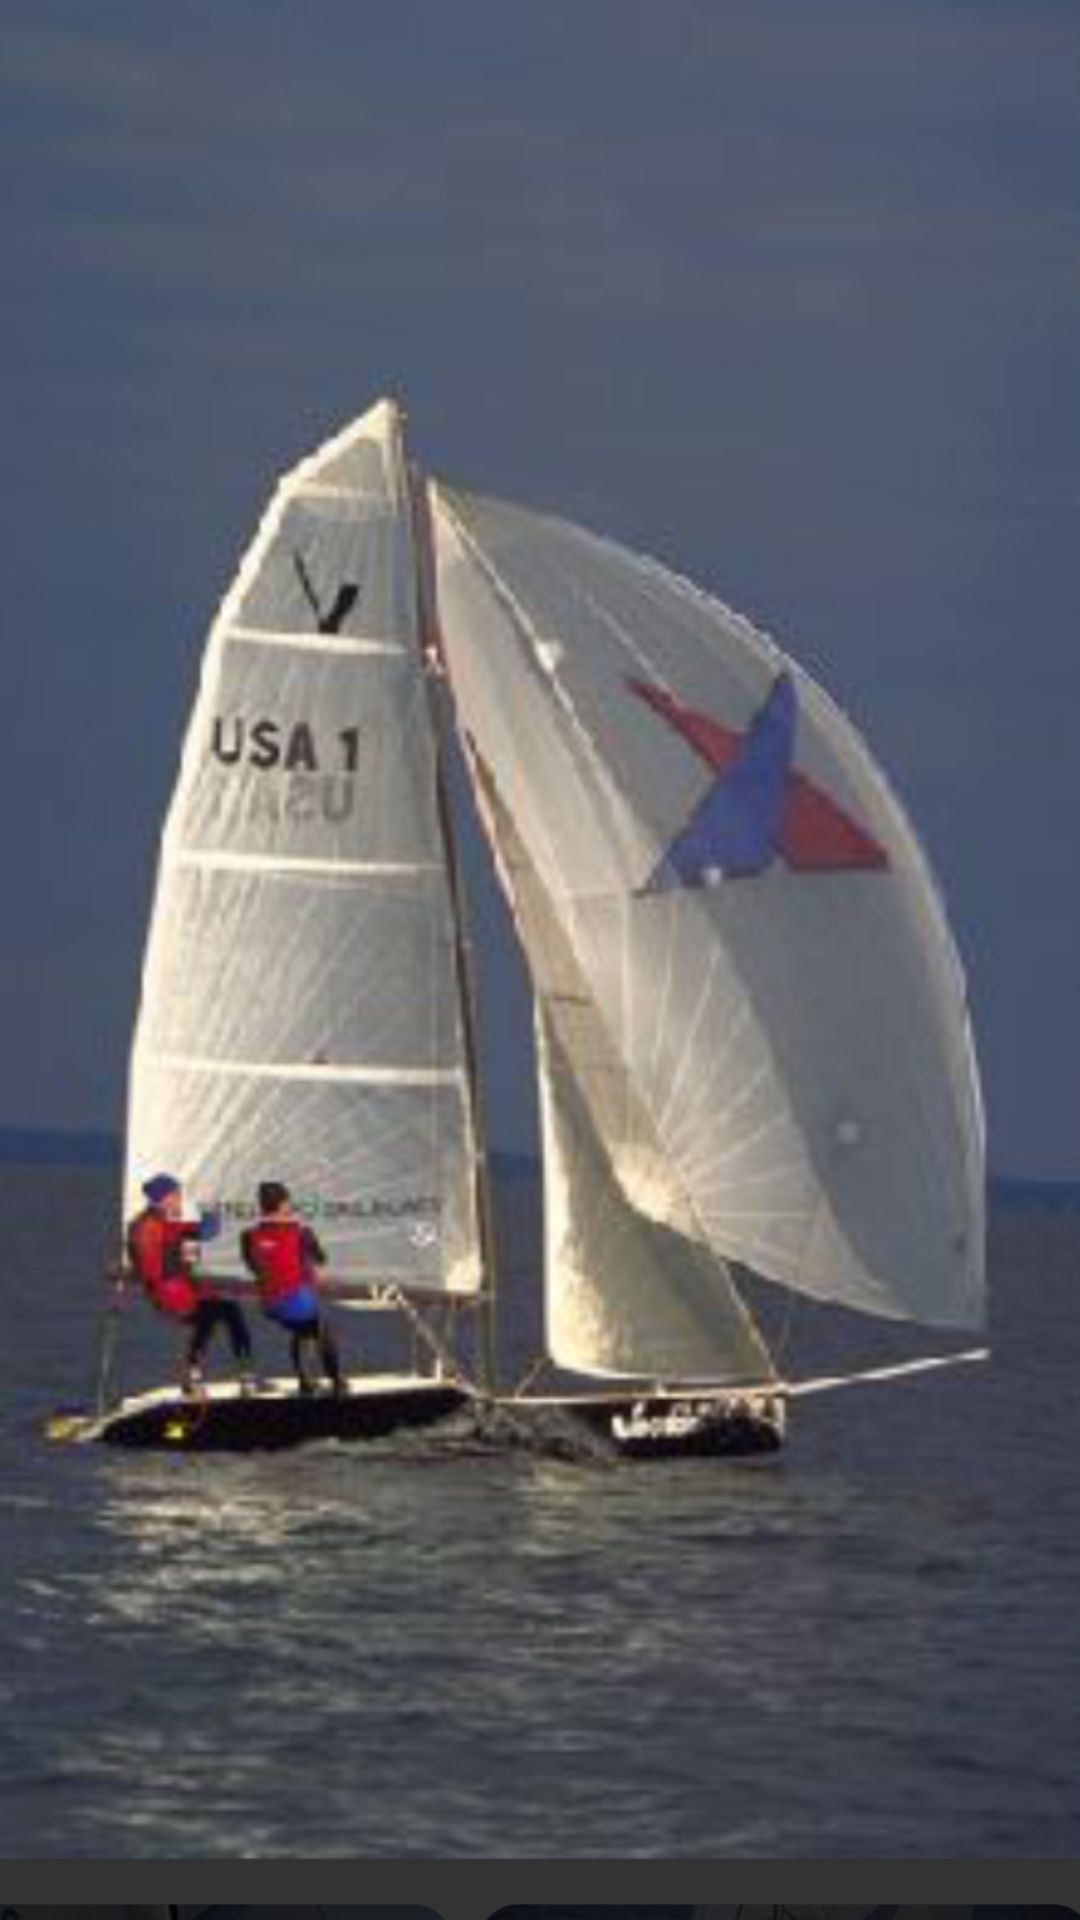 Vanguard vector sailboat skiff